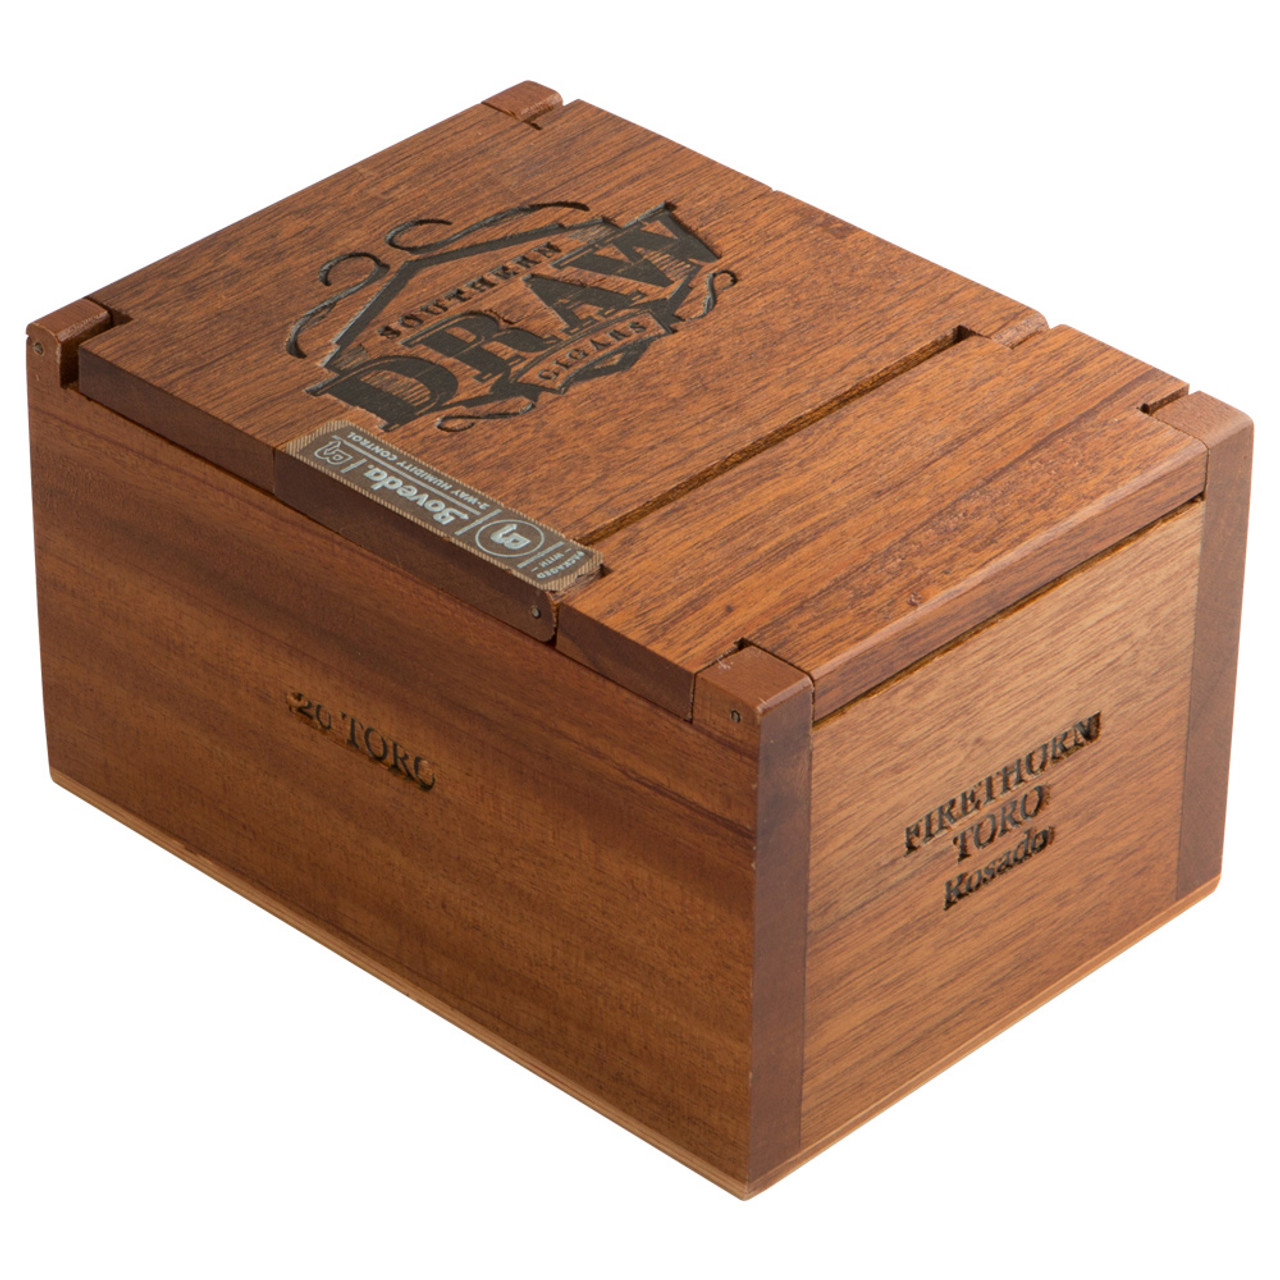 Southern Draw Firethorn Gordo Cigars - 6.5 x 60 (Box of 20)